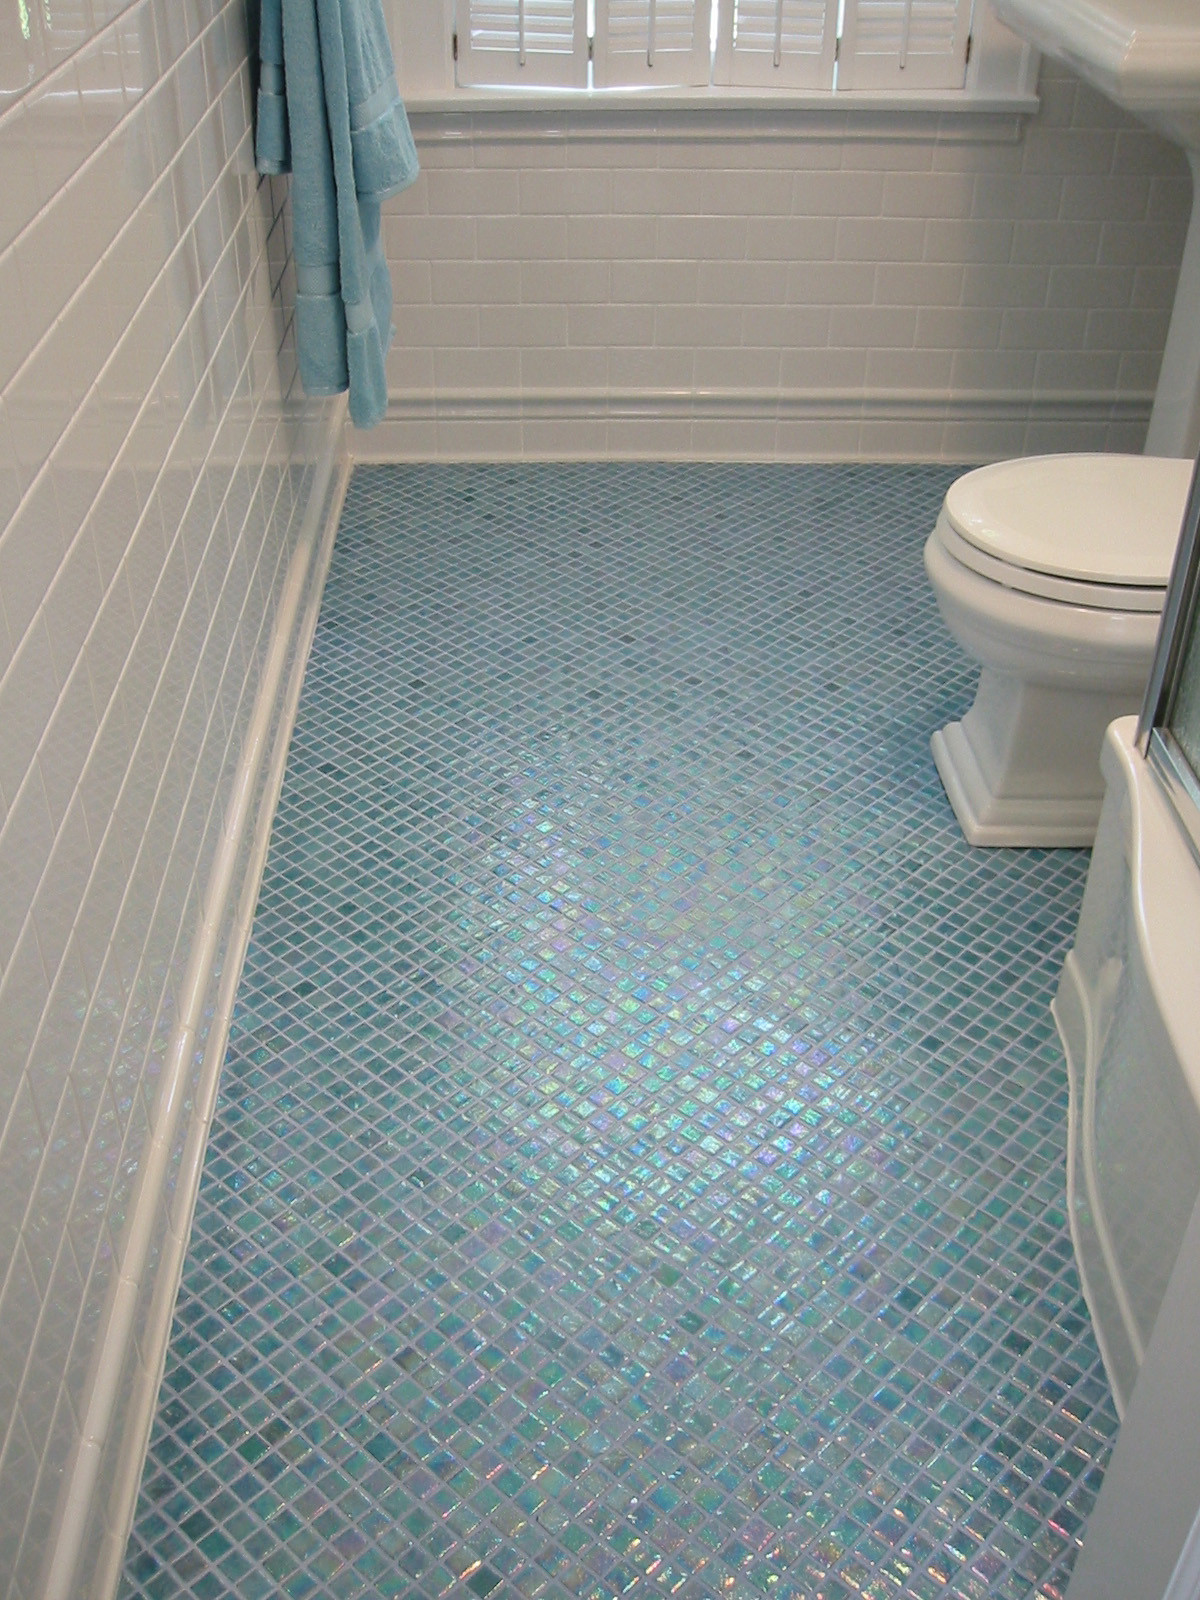 Tiles For Small Bathroom Floor
 Just Grand Original 1930 s Hall Bathroom Remodel